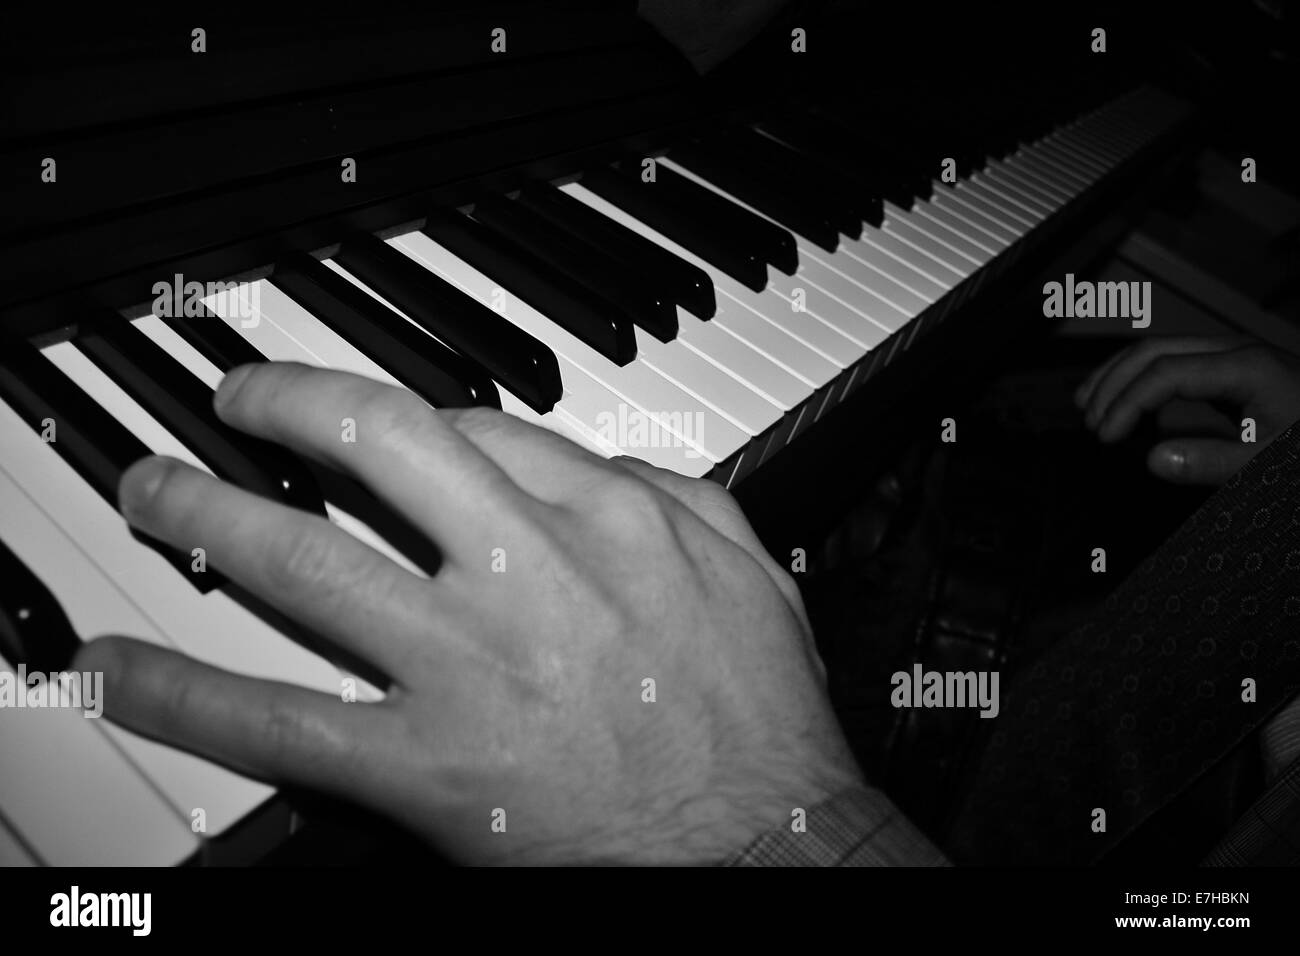 Playing piano Stock Photo